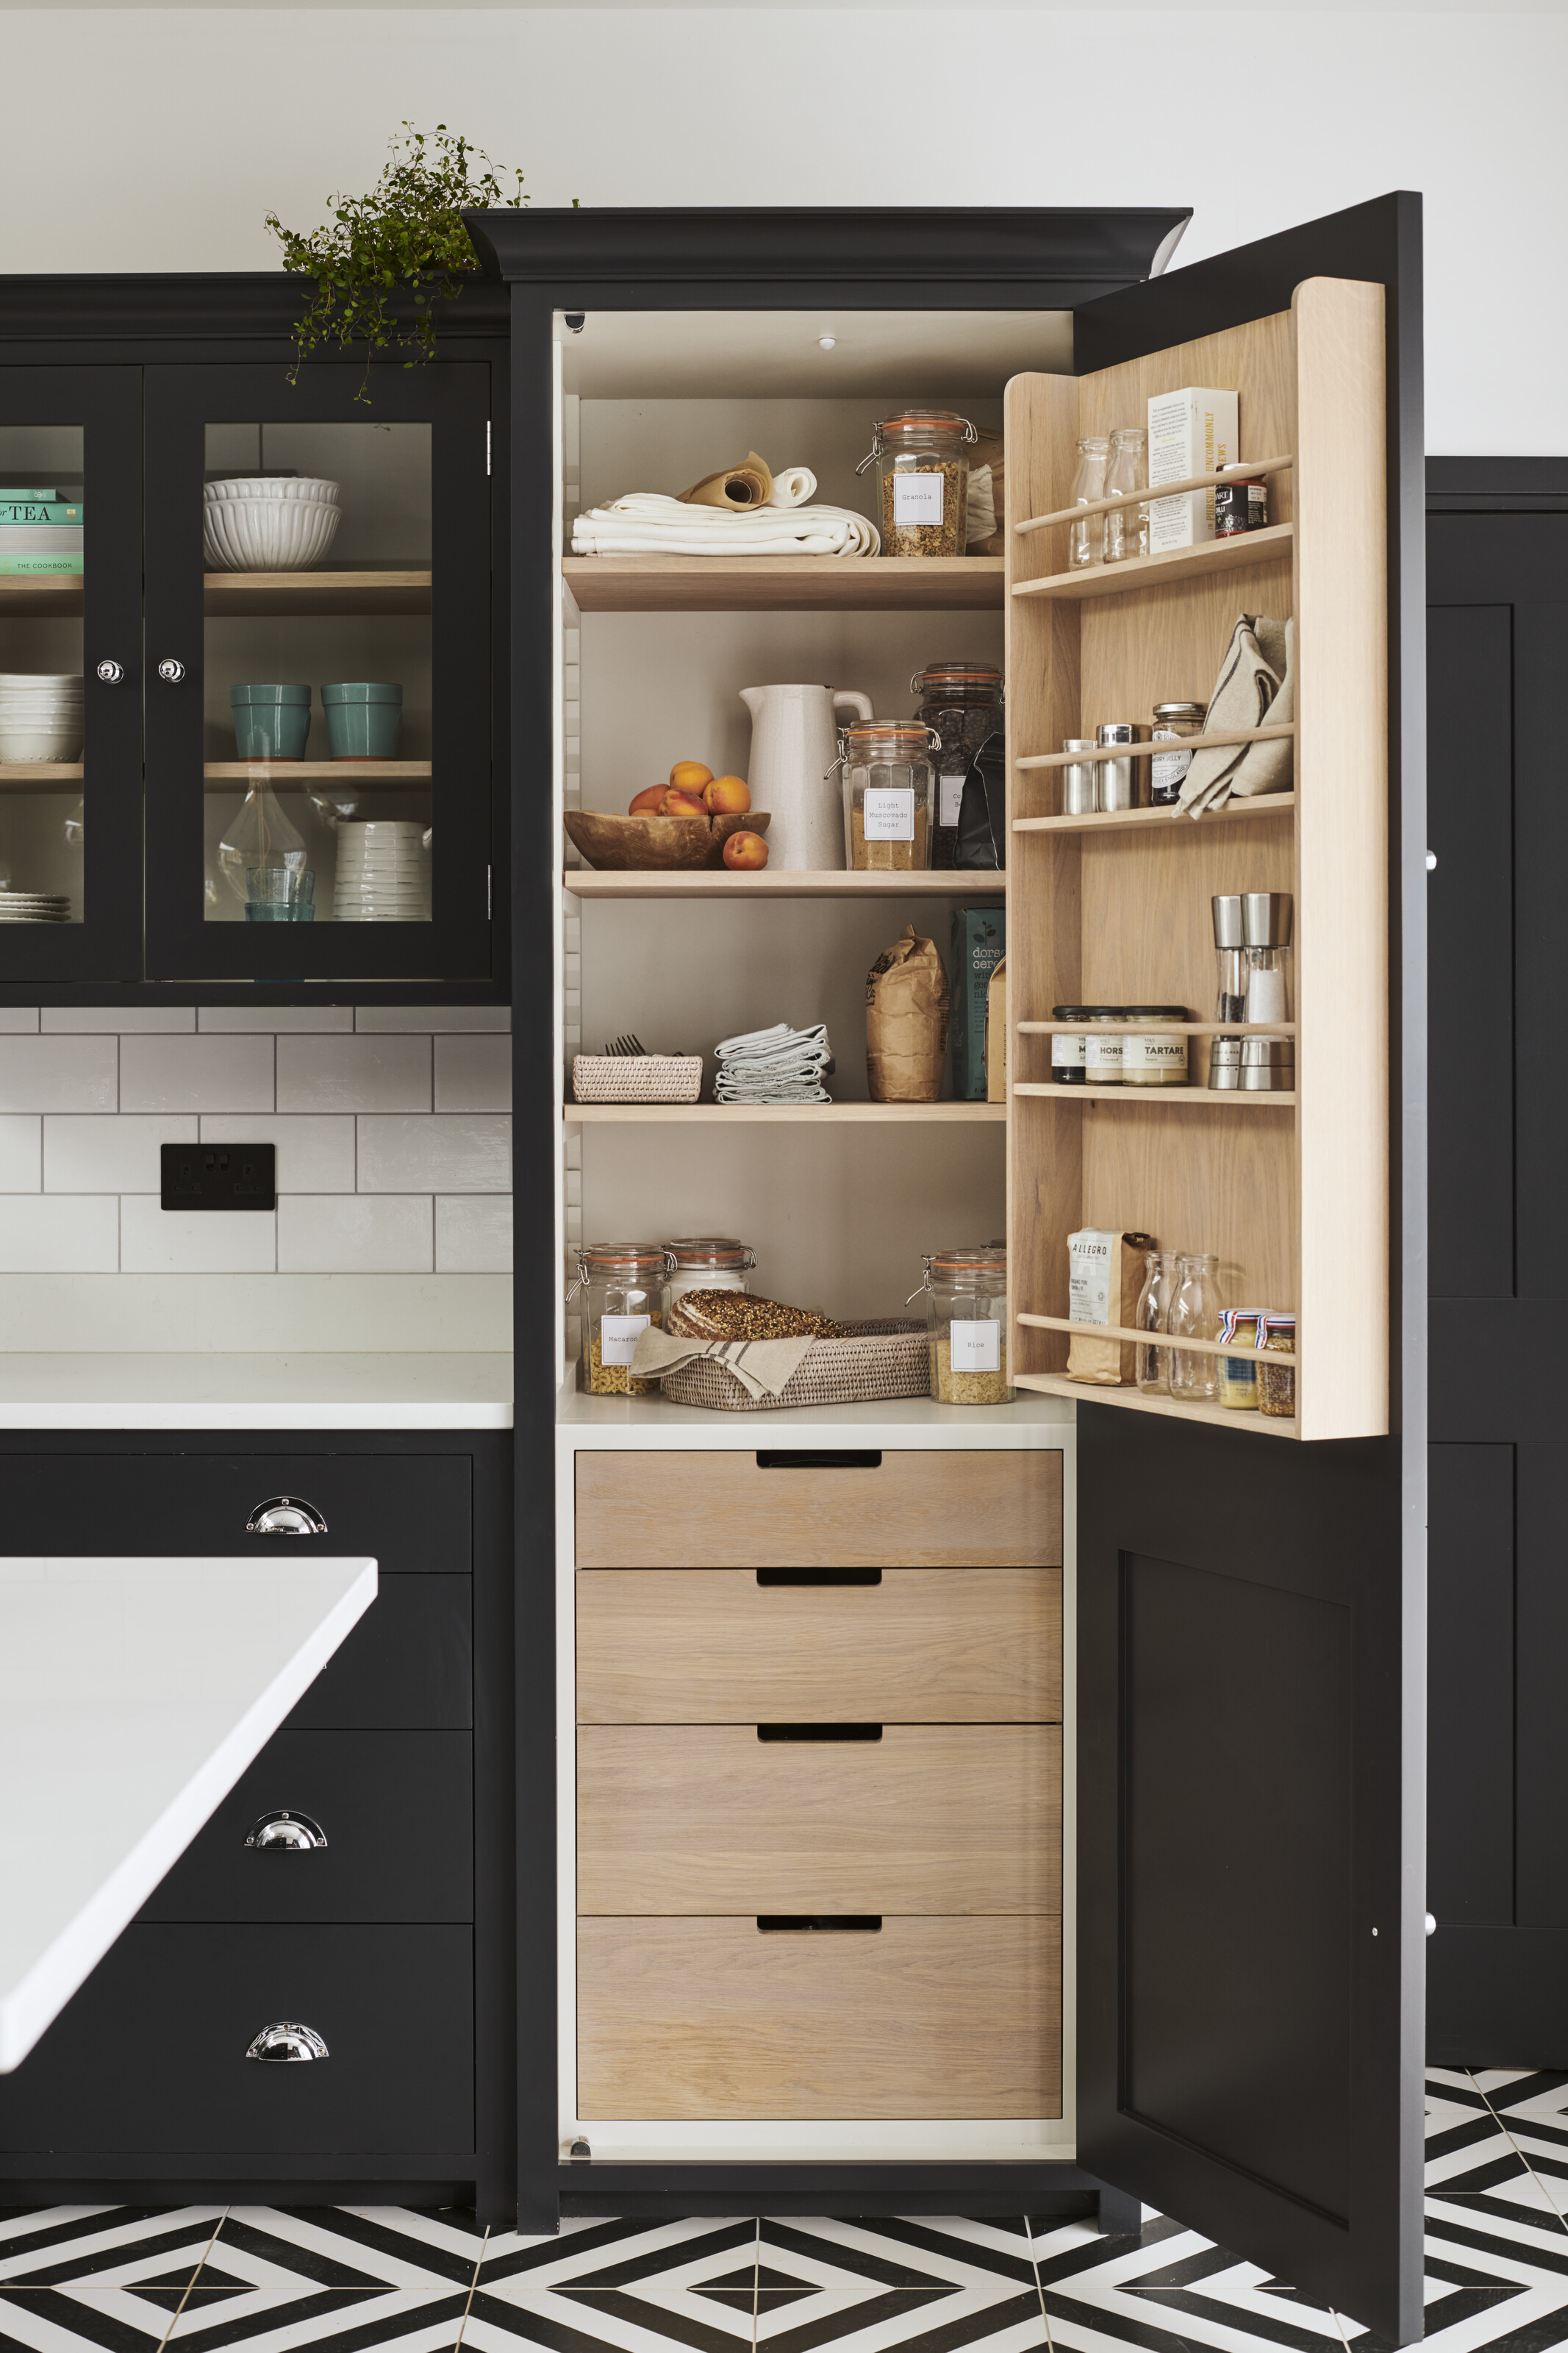 How to organize a pantry with deep shelves – 6 expert tips | Livingetc